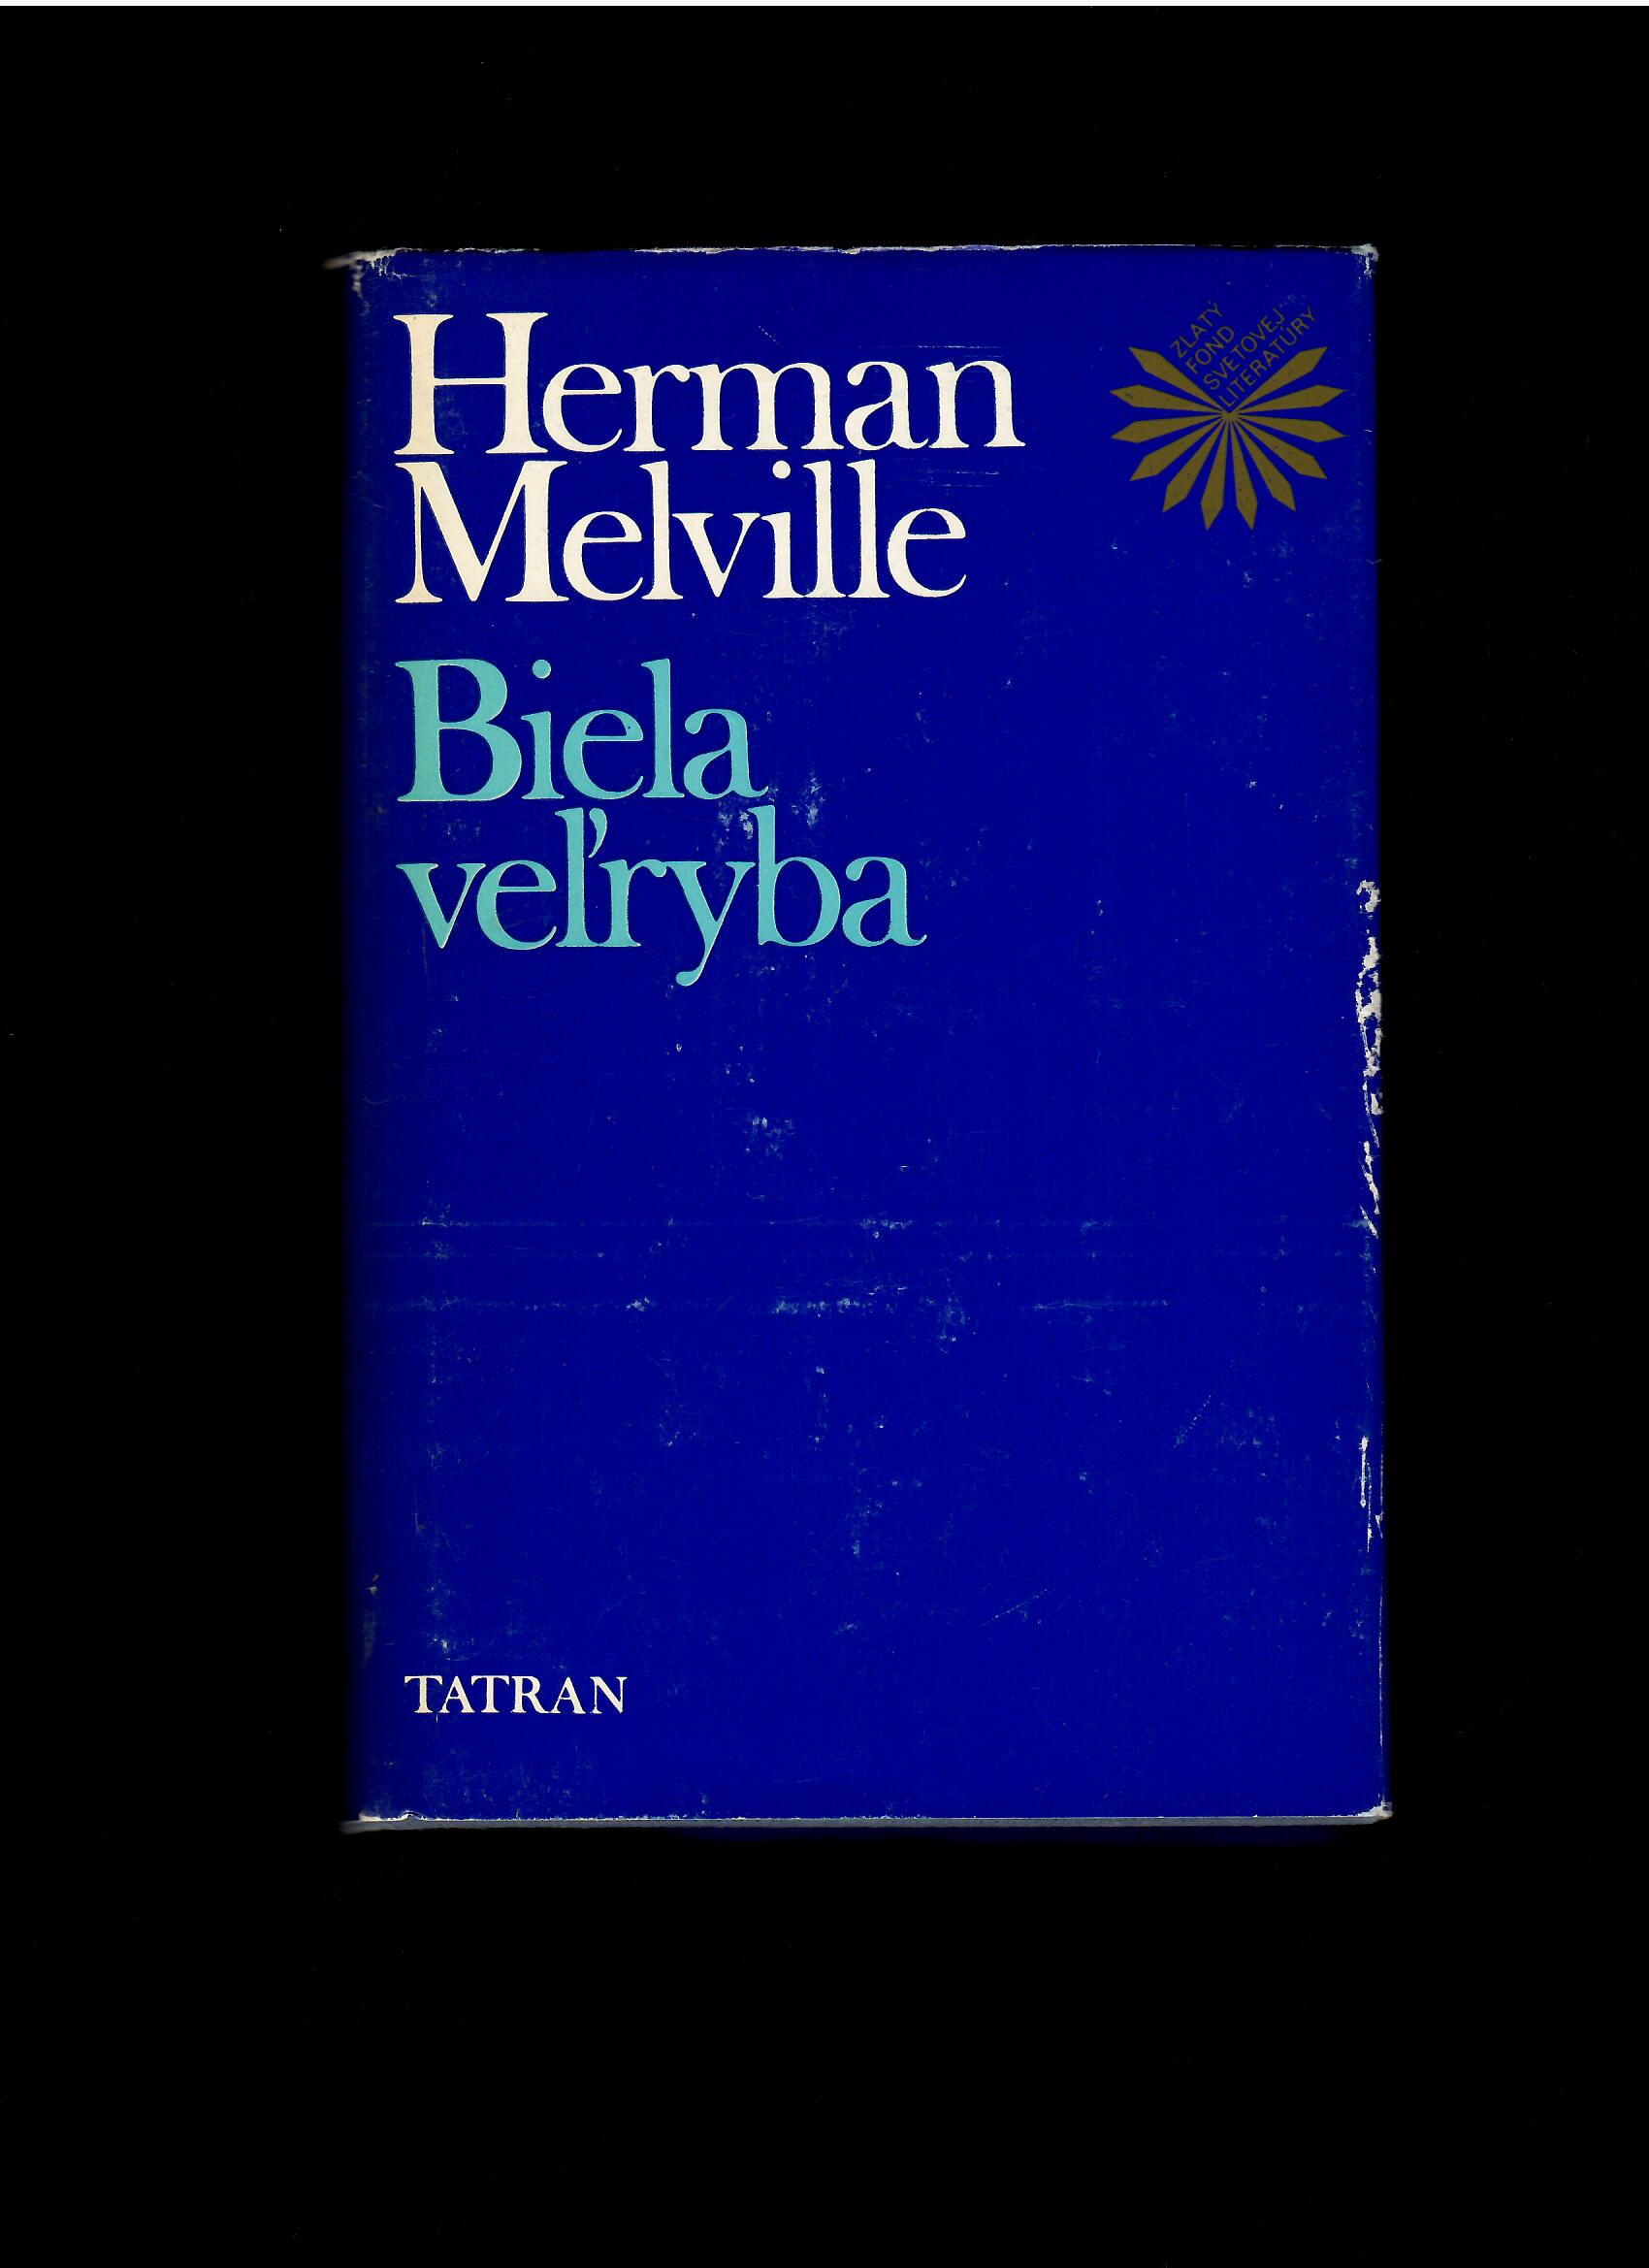 Hermann Melville: Biela veľryba